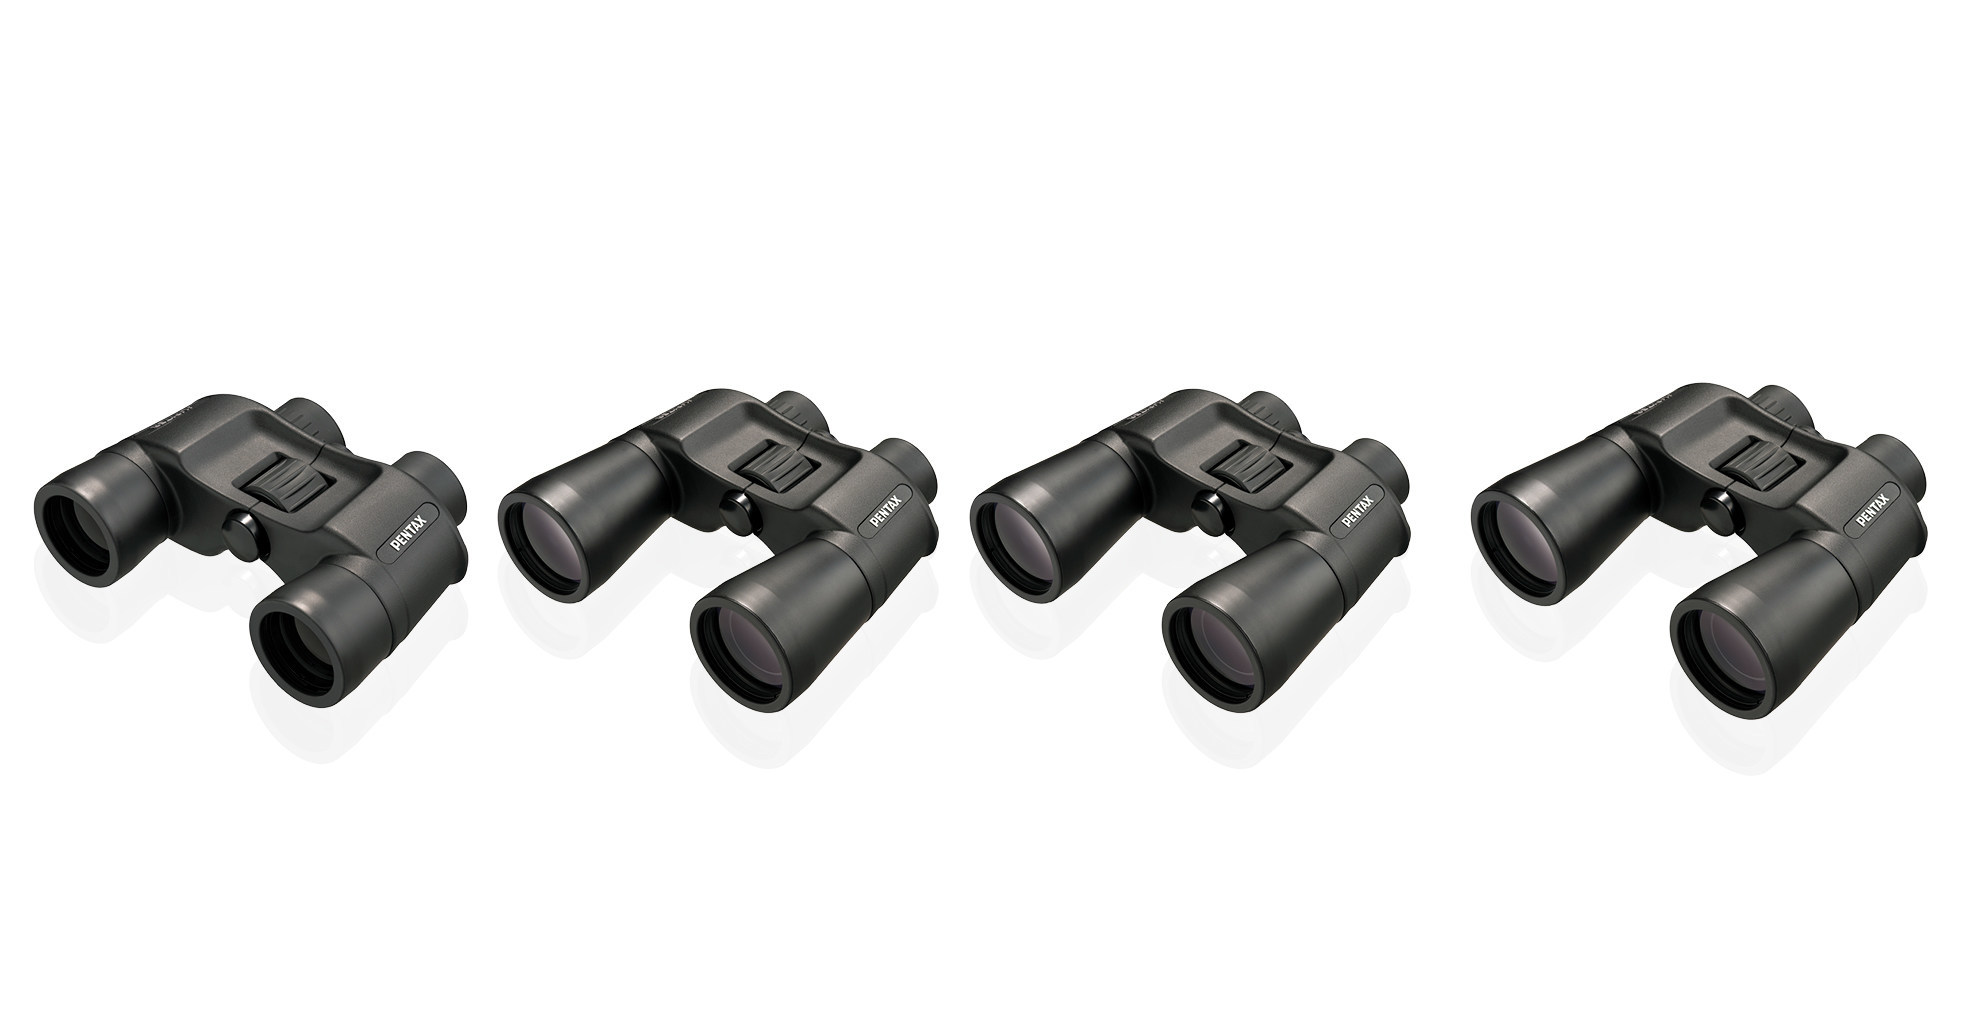 Ricoh Announces PENTAX JUPITER Series Binoculars